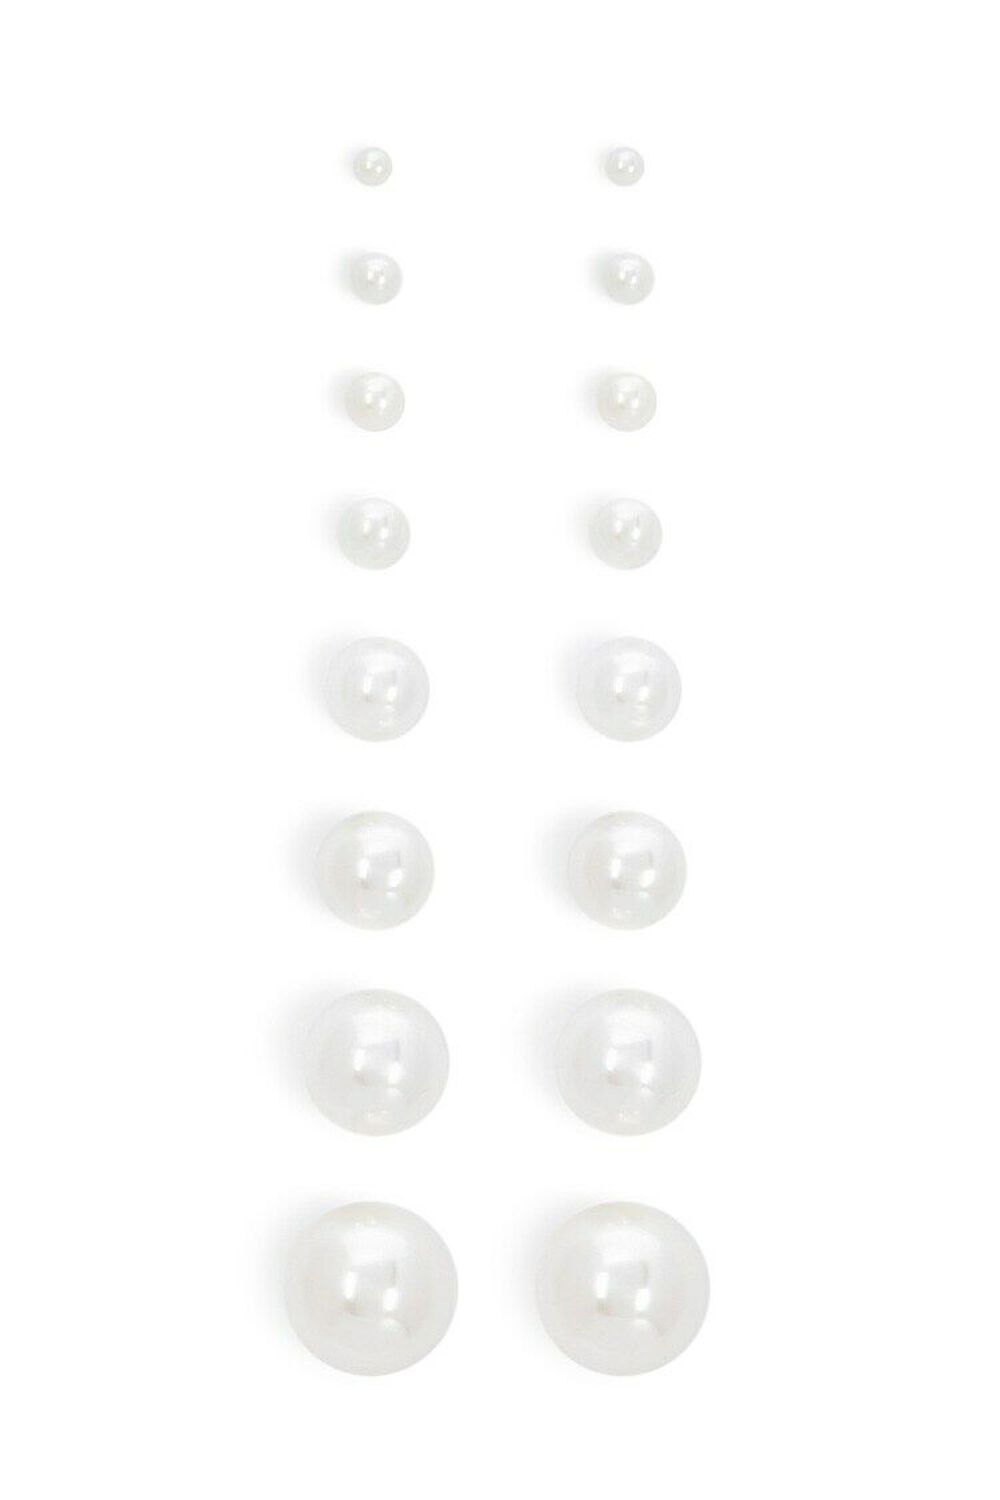 Faux Pearl Stud Earring Set, image 1